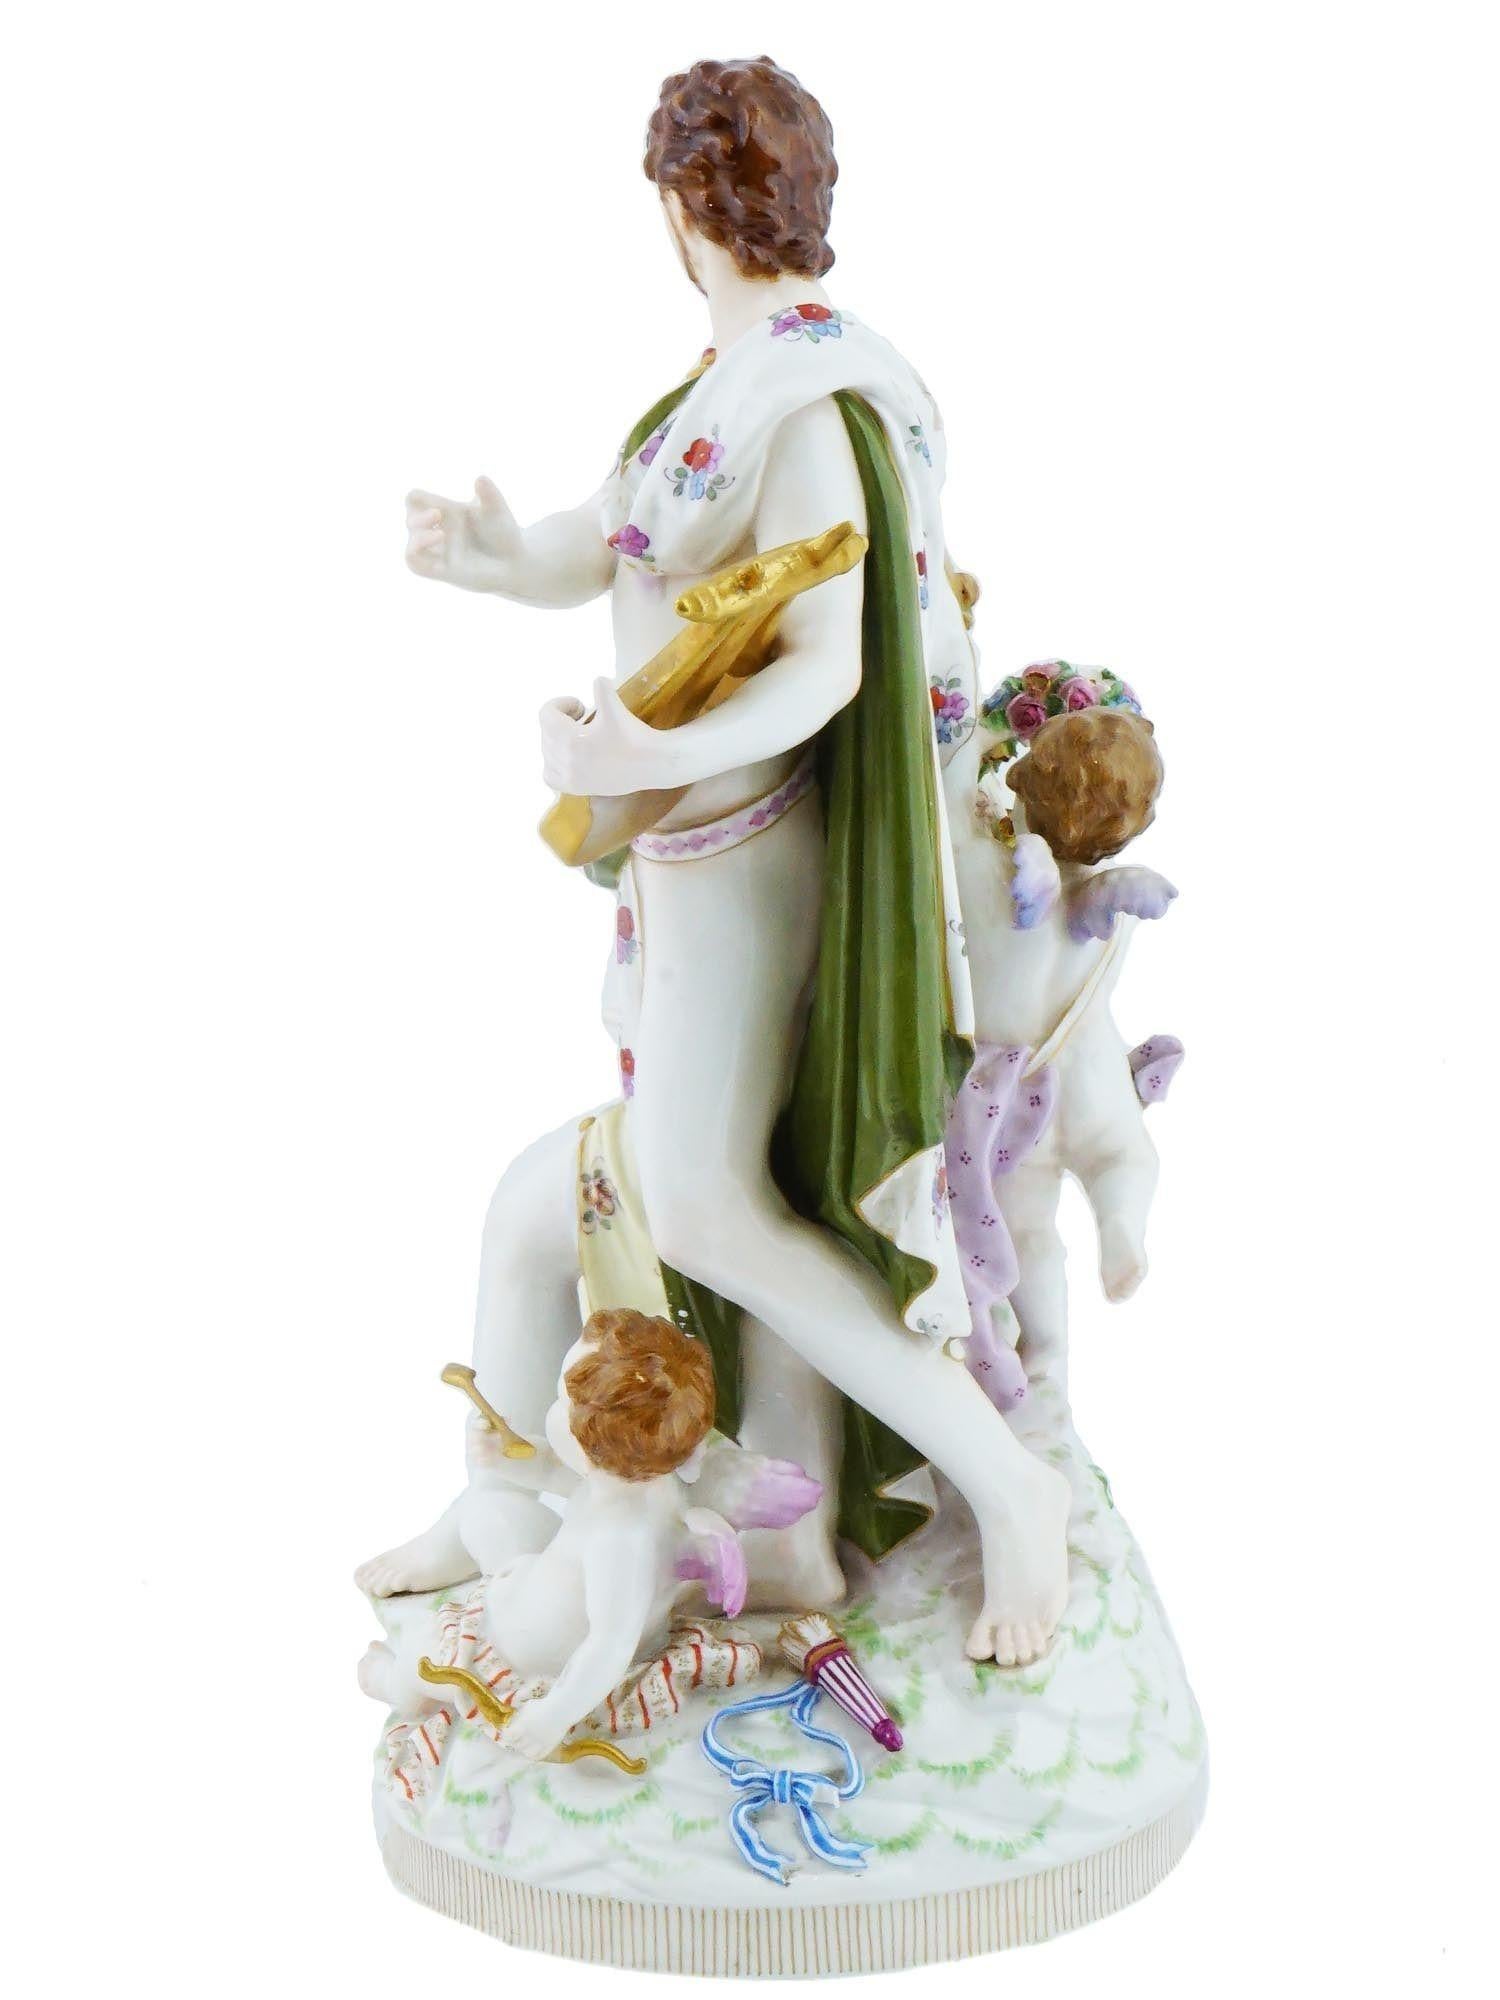 19th Century KPM Porcelain Figurine Depicting Orpheus and Eurydice For Sale